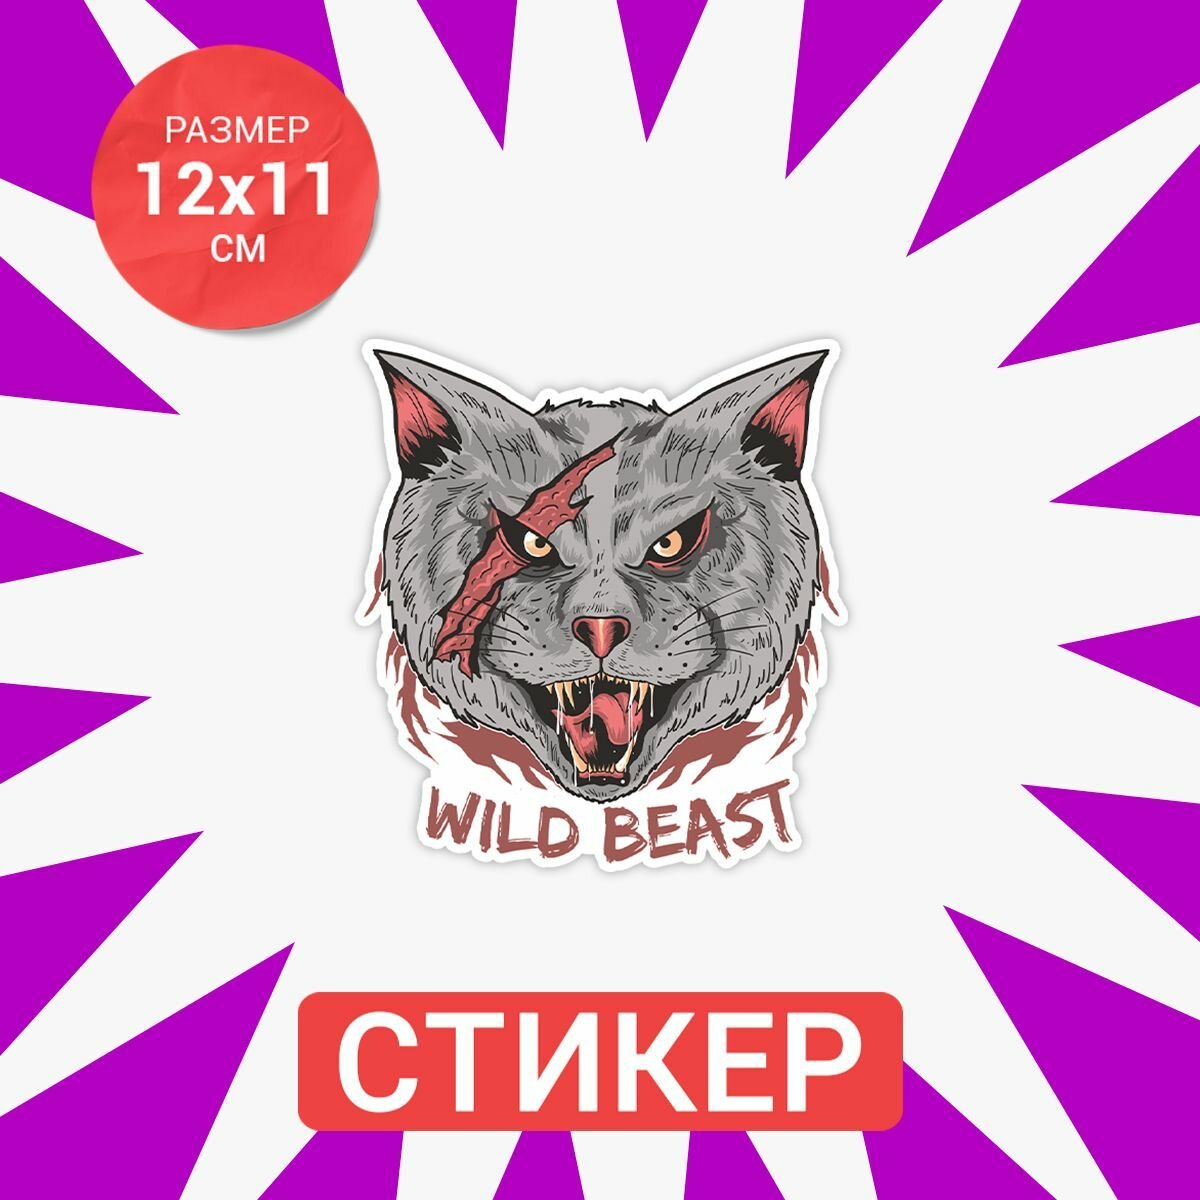 Наклейка Wild beast 12x11 см